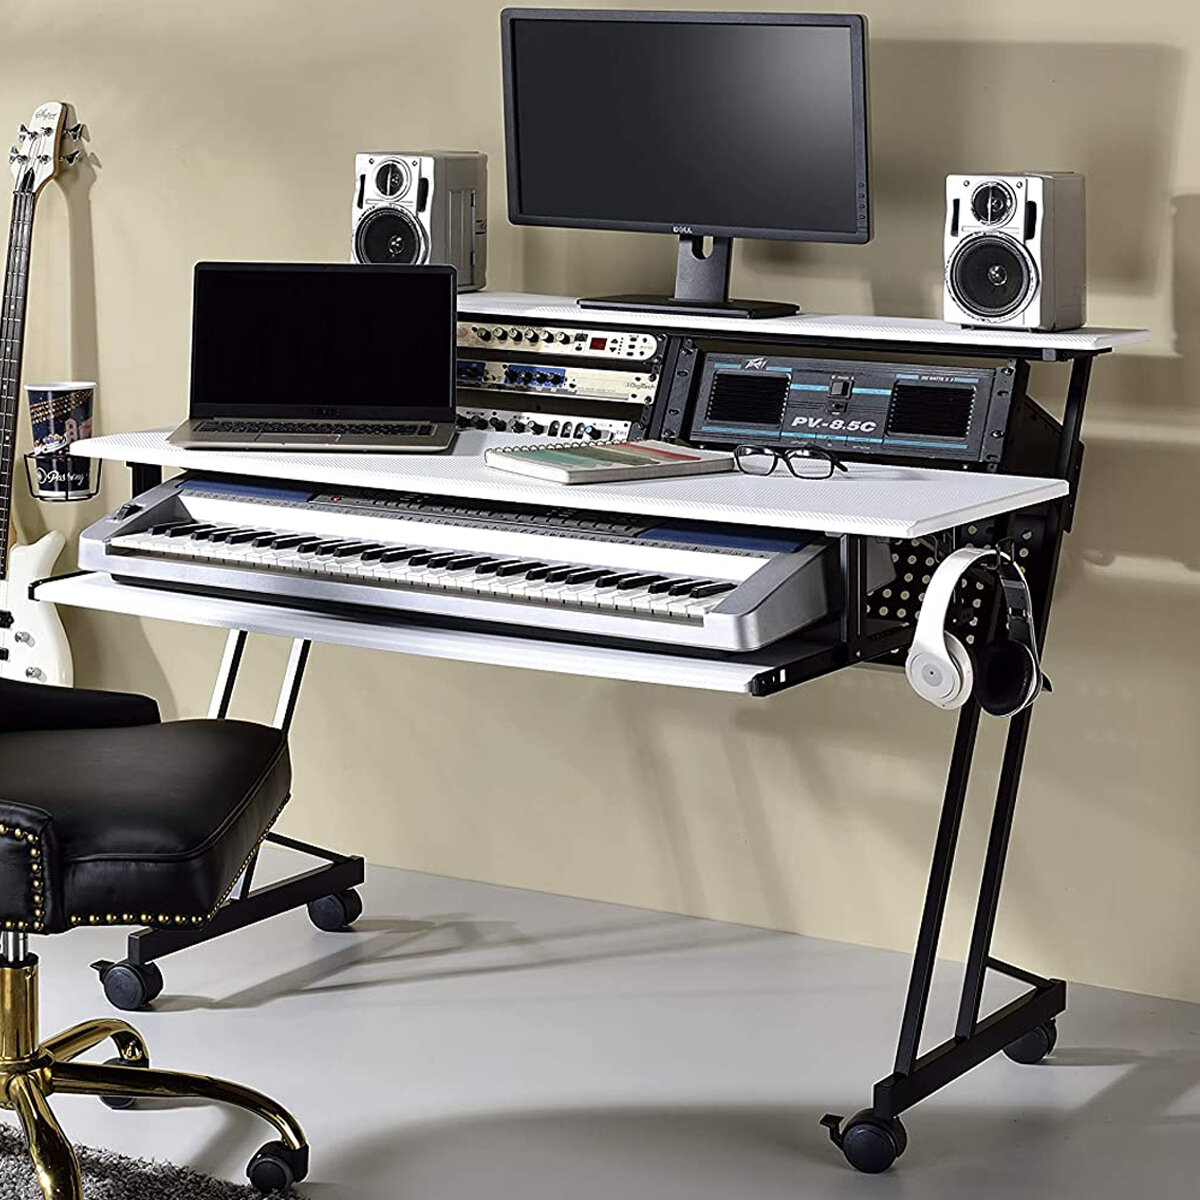 Exiquio Music Studio Producer Recording Piano Stand Desk Unique Smart Design Workstation Table Carbon Fiber Texture 